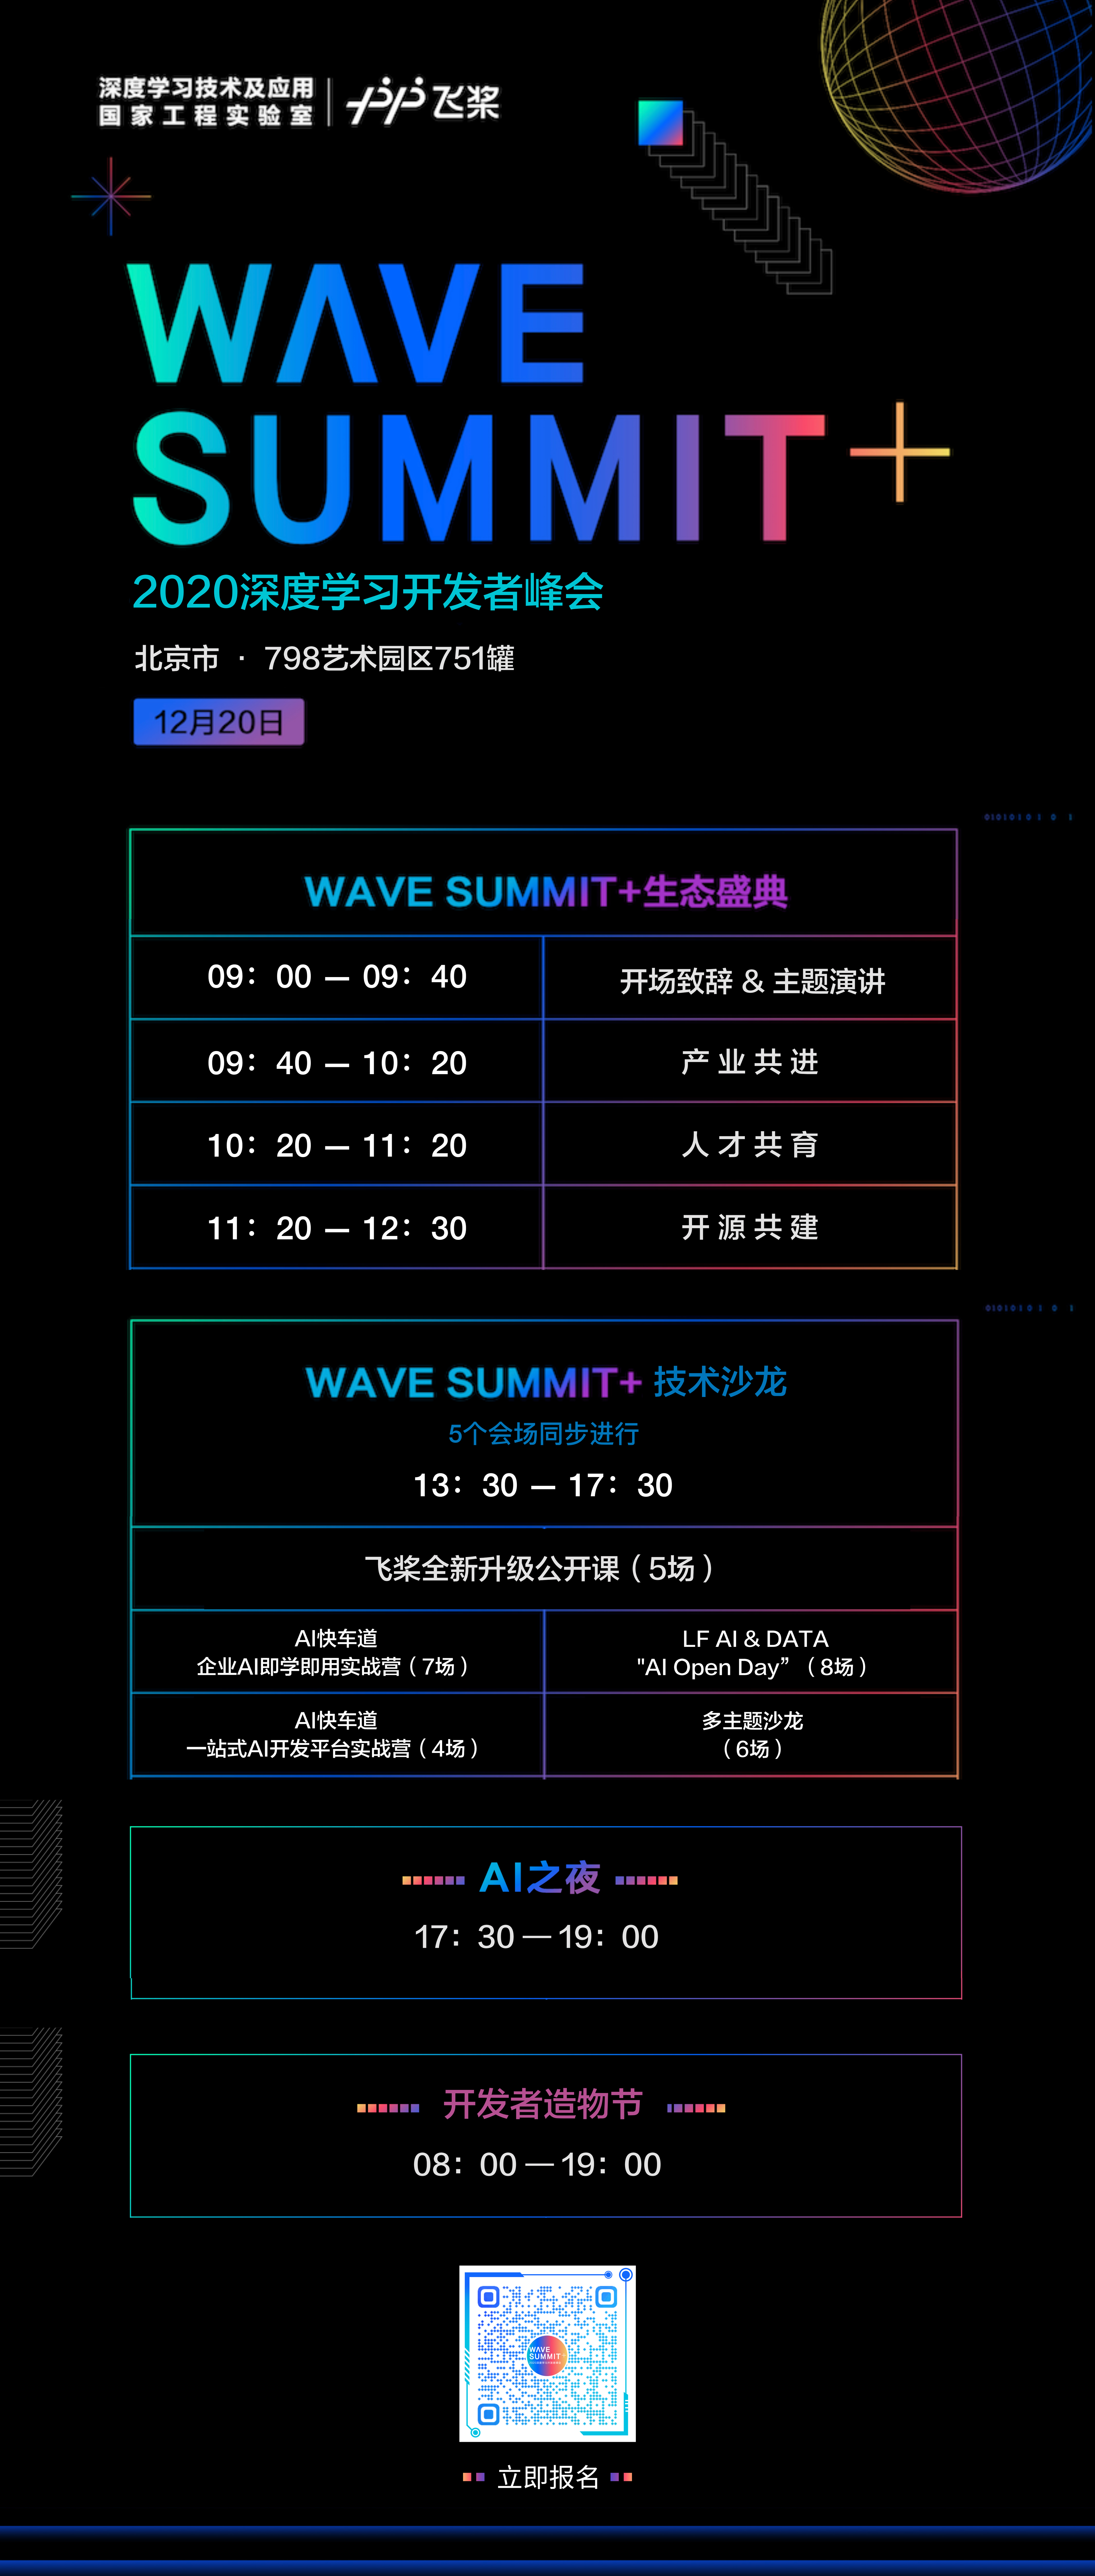 AI狂欢日到来！WAVE SUMMIT+2020深度学习开发者峰会报名启动  